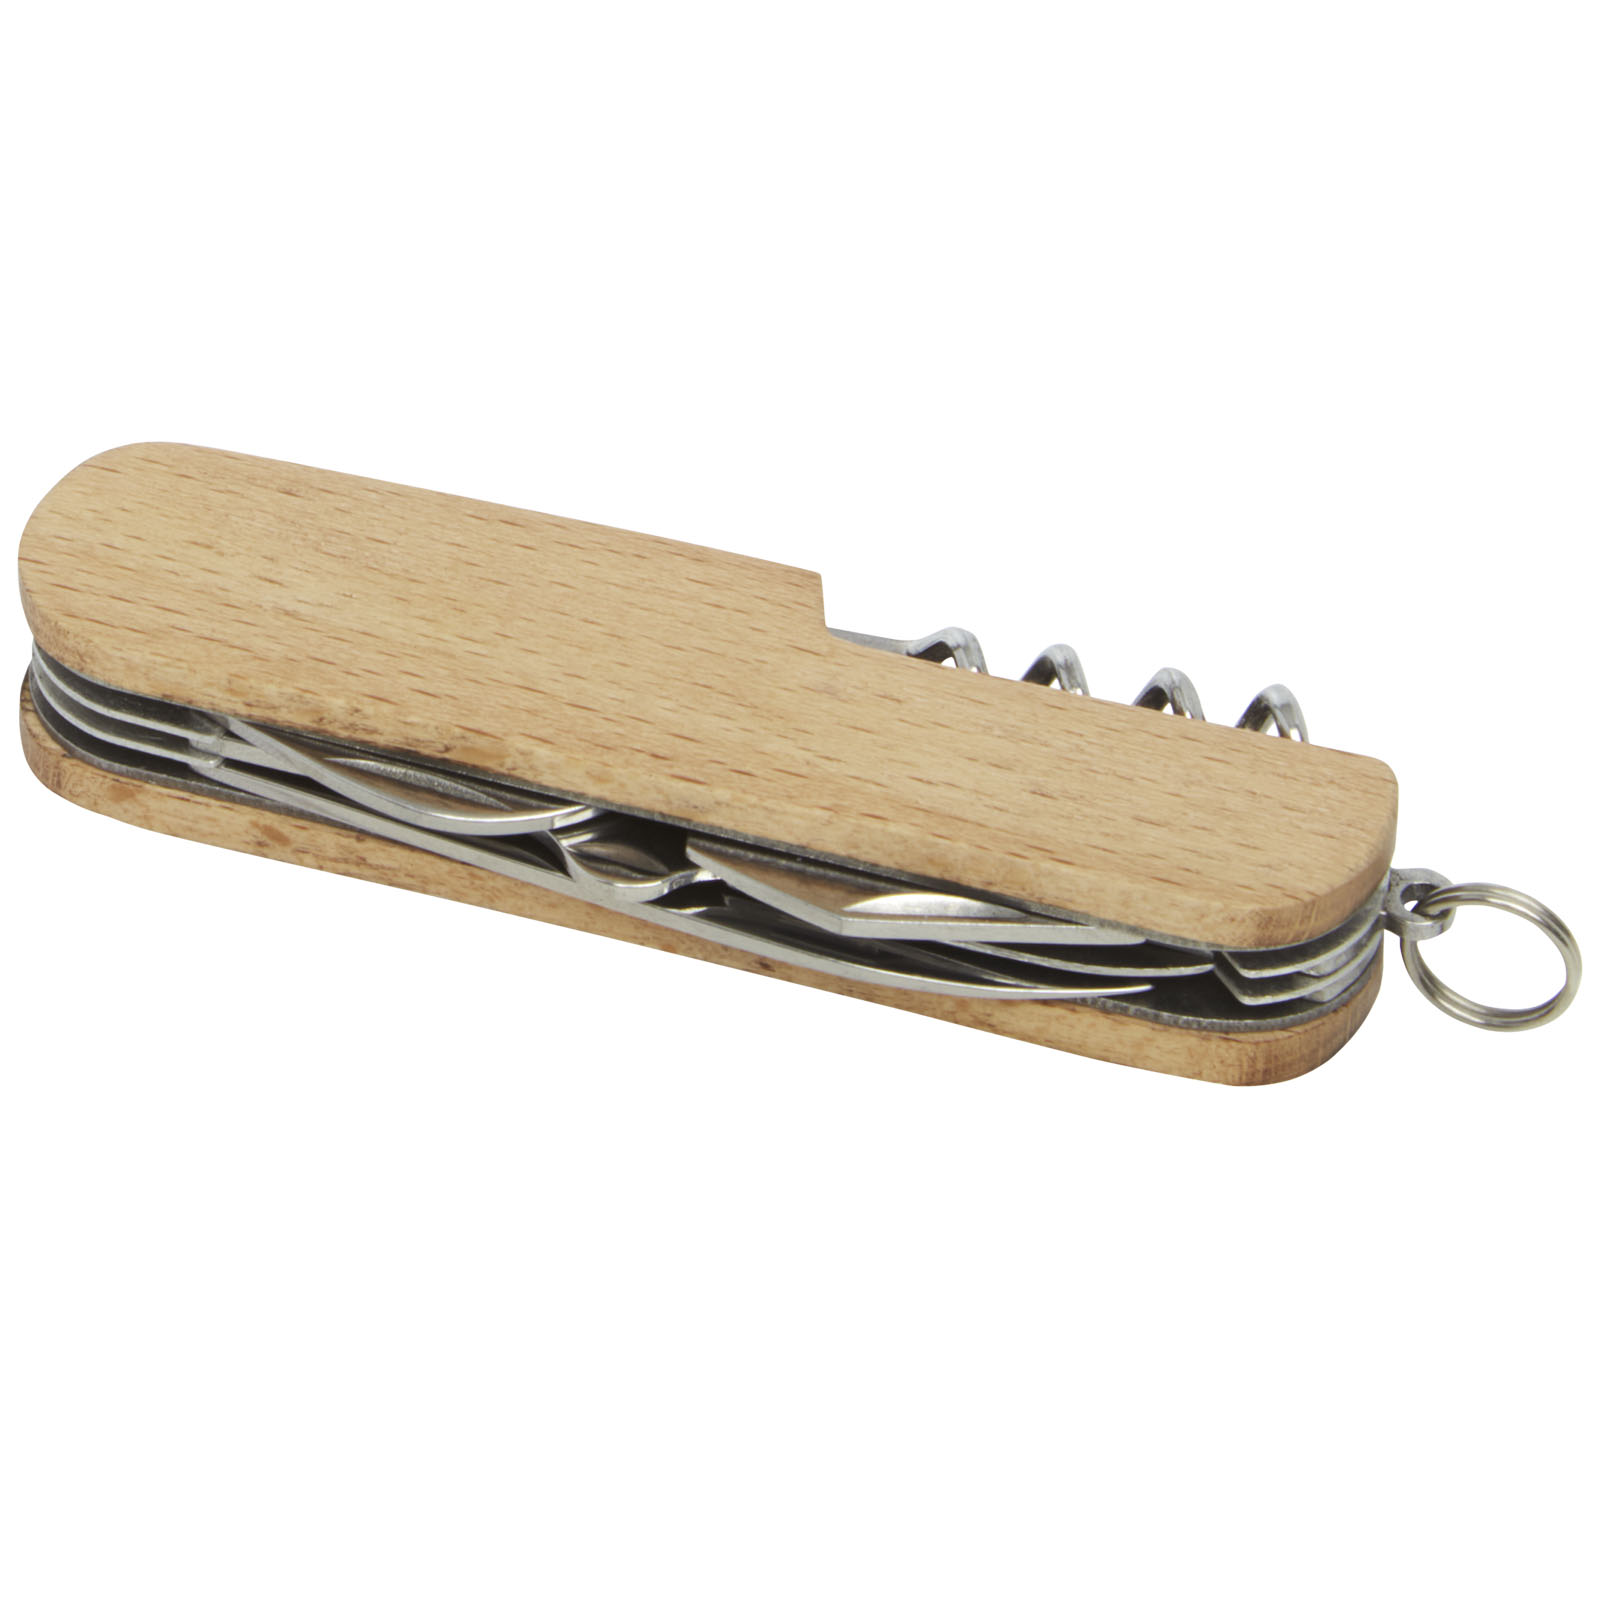 Advertising Multitools - Richard 7-function wooden pocket knife - 4